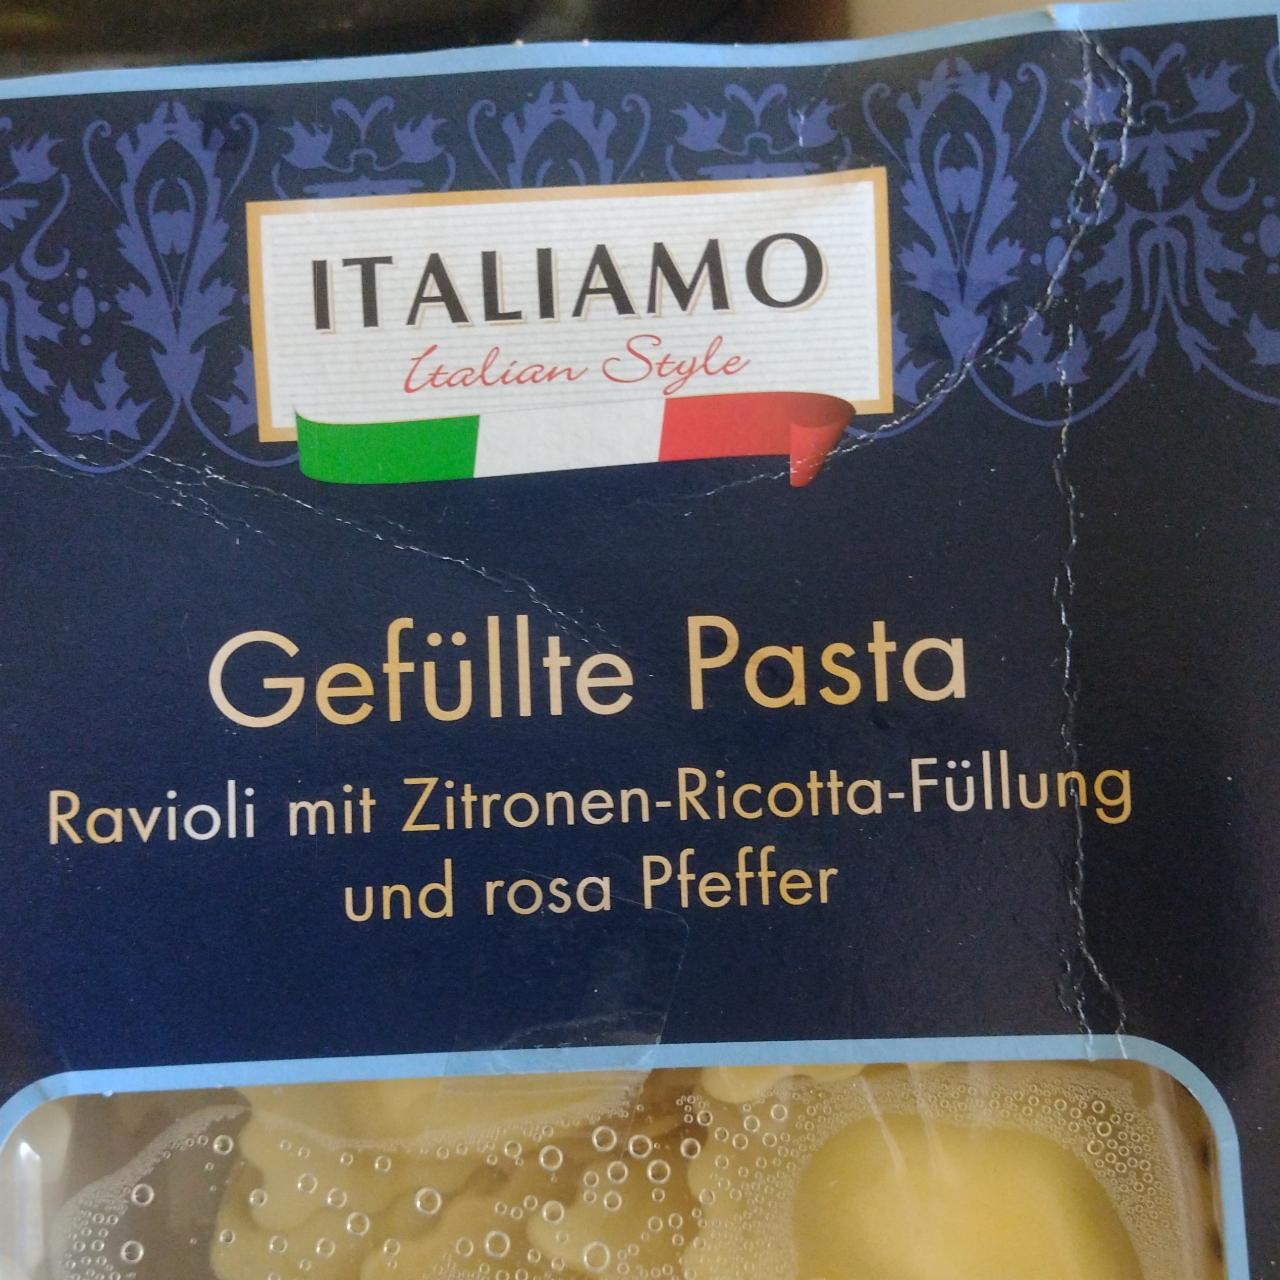 Ravioli und Pasta kalorie, hodnoty nutriční Gefüllte Zitronen-Ricotta-Füllung mit rosa kJ Italiamo Pfeffer - a